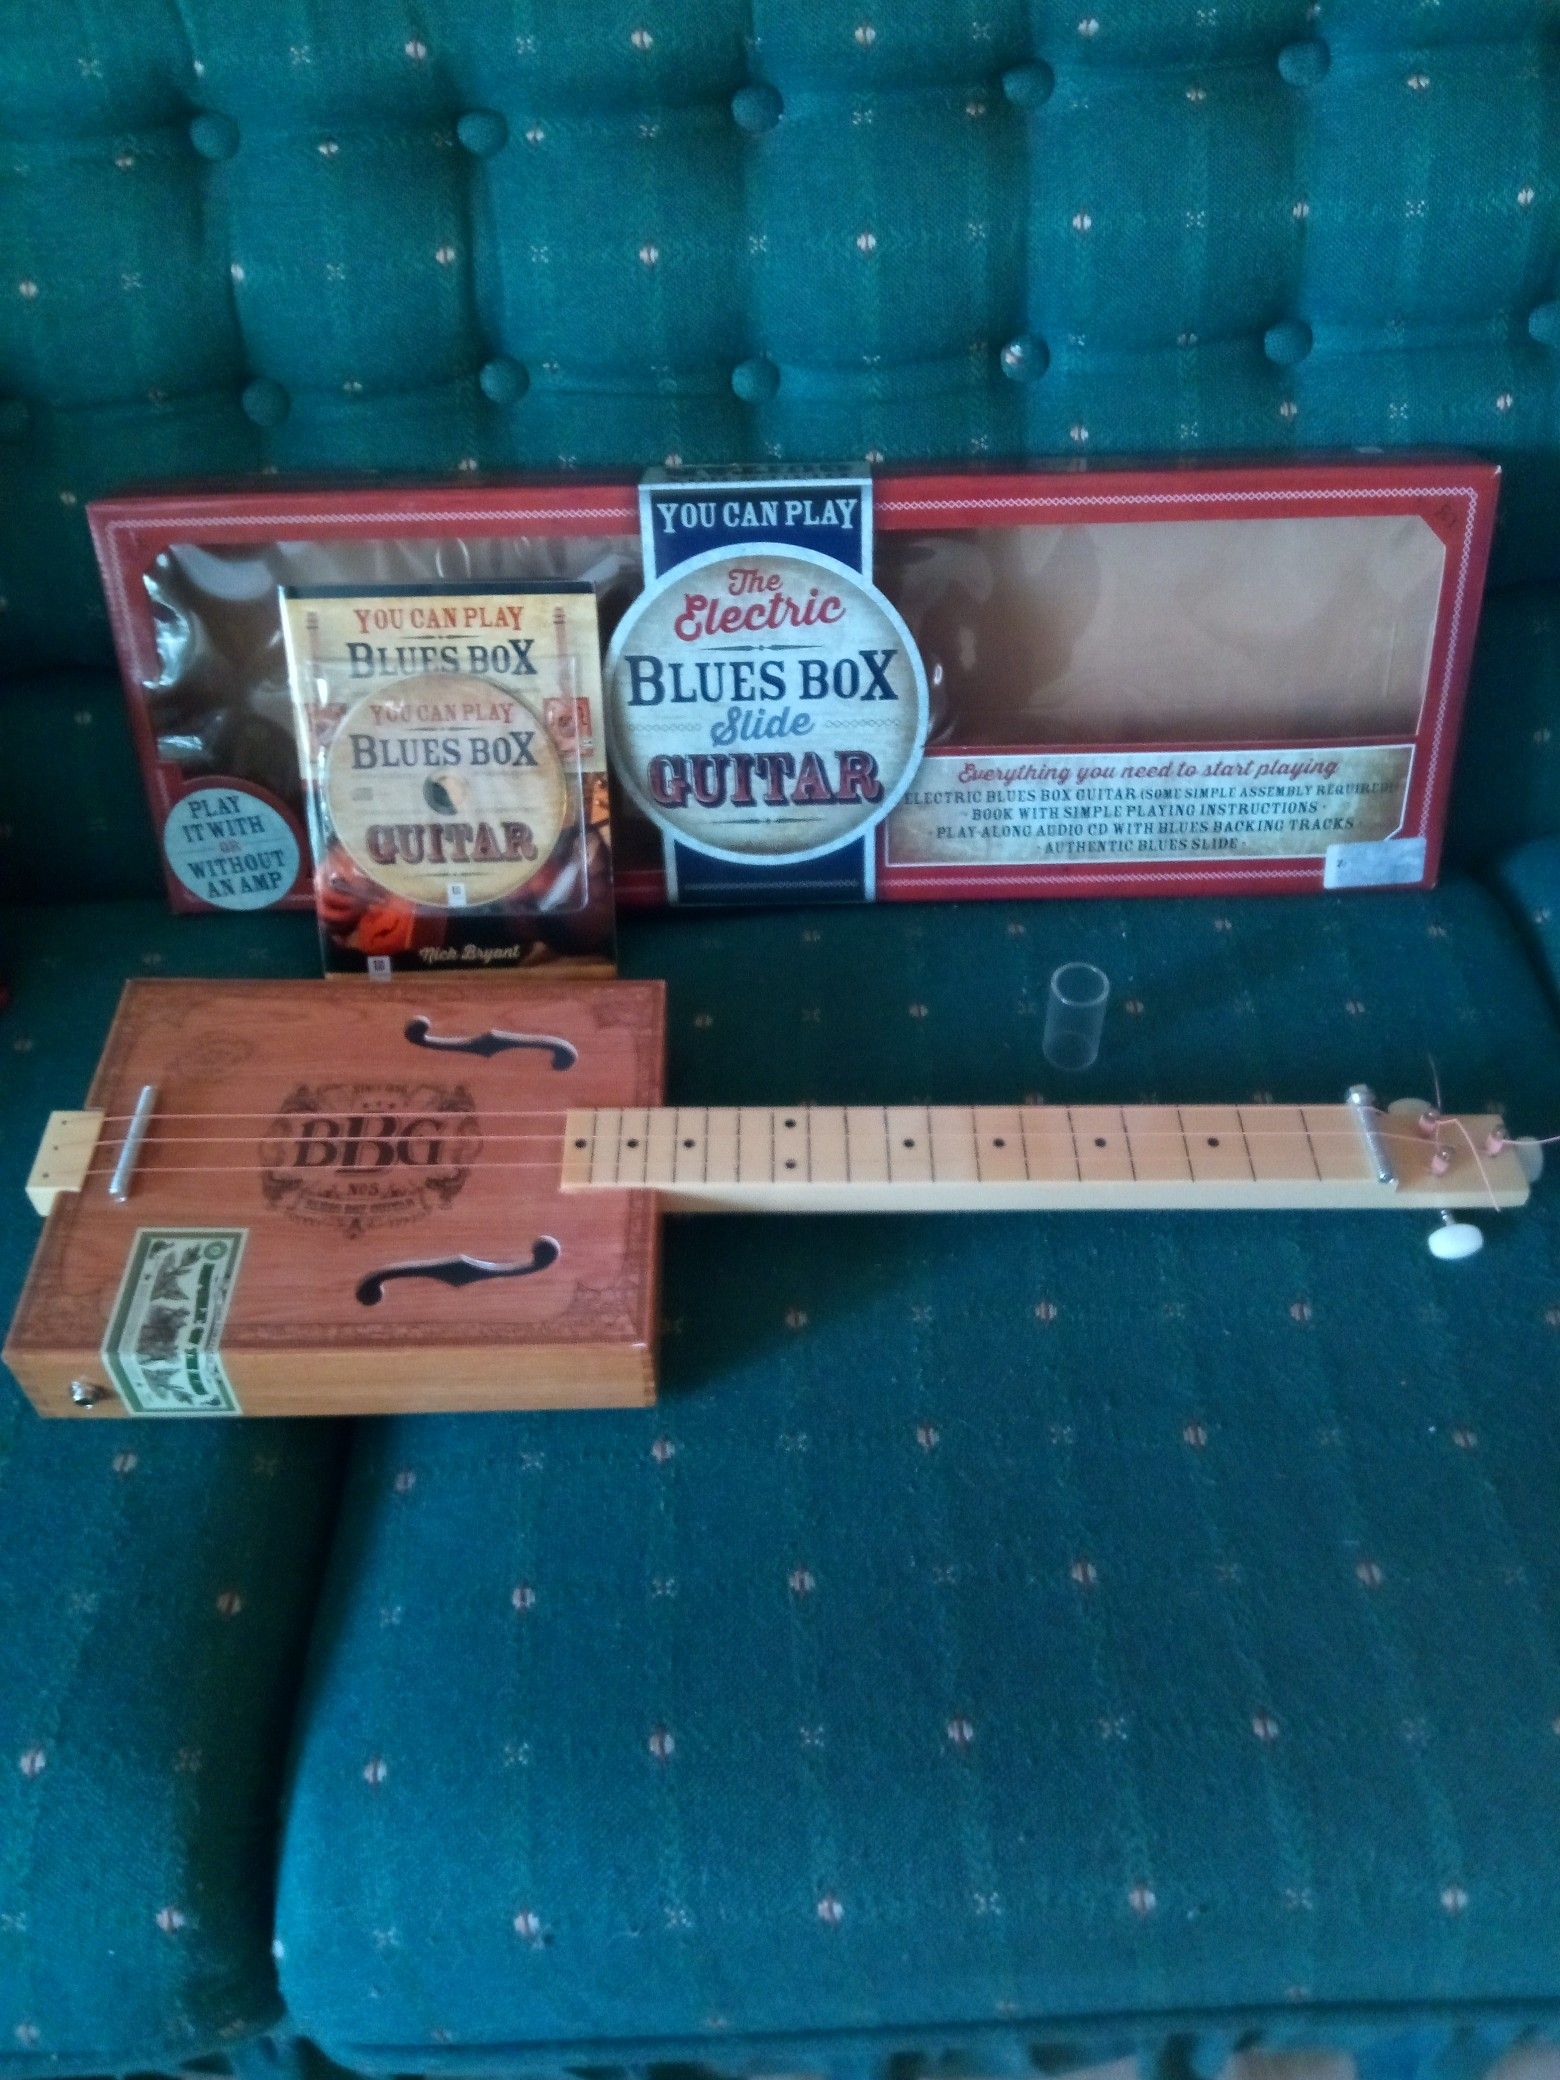 Electric slide cigar box guitar $25